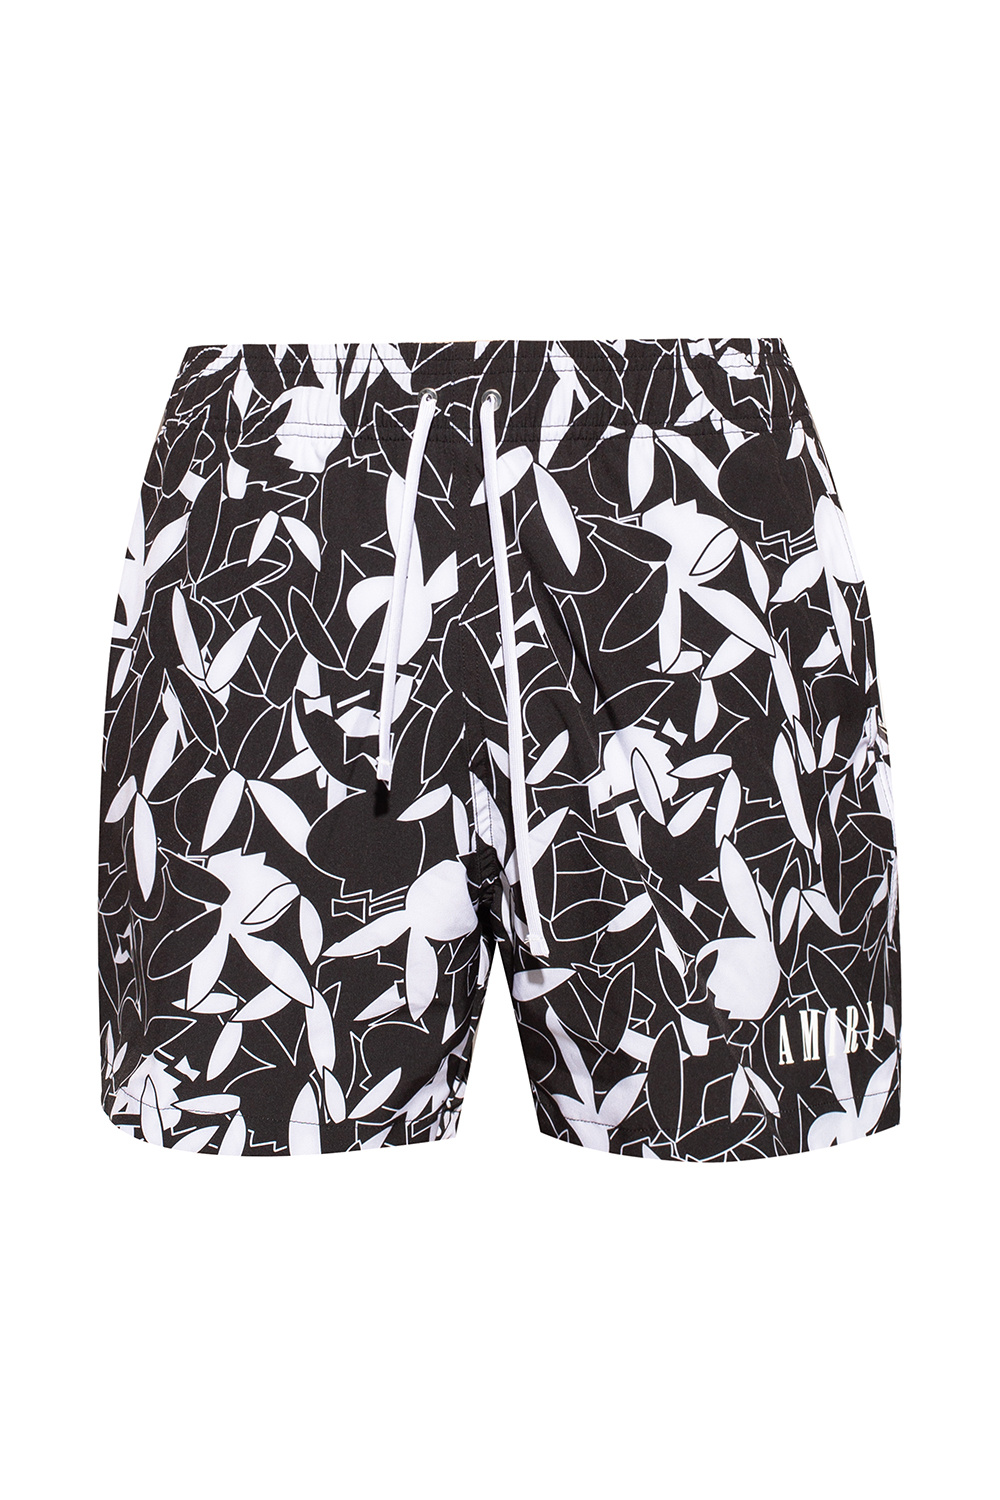 Moschino paint-splatter shorts - Black